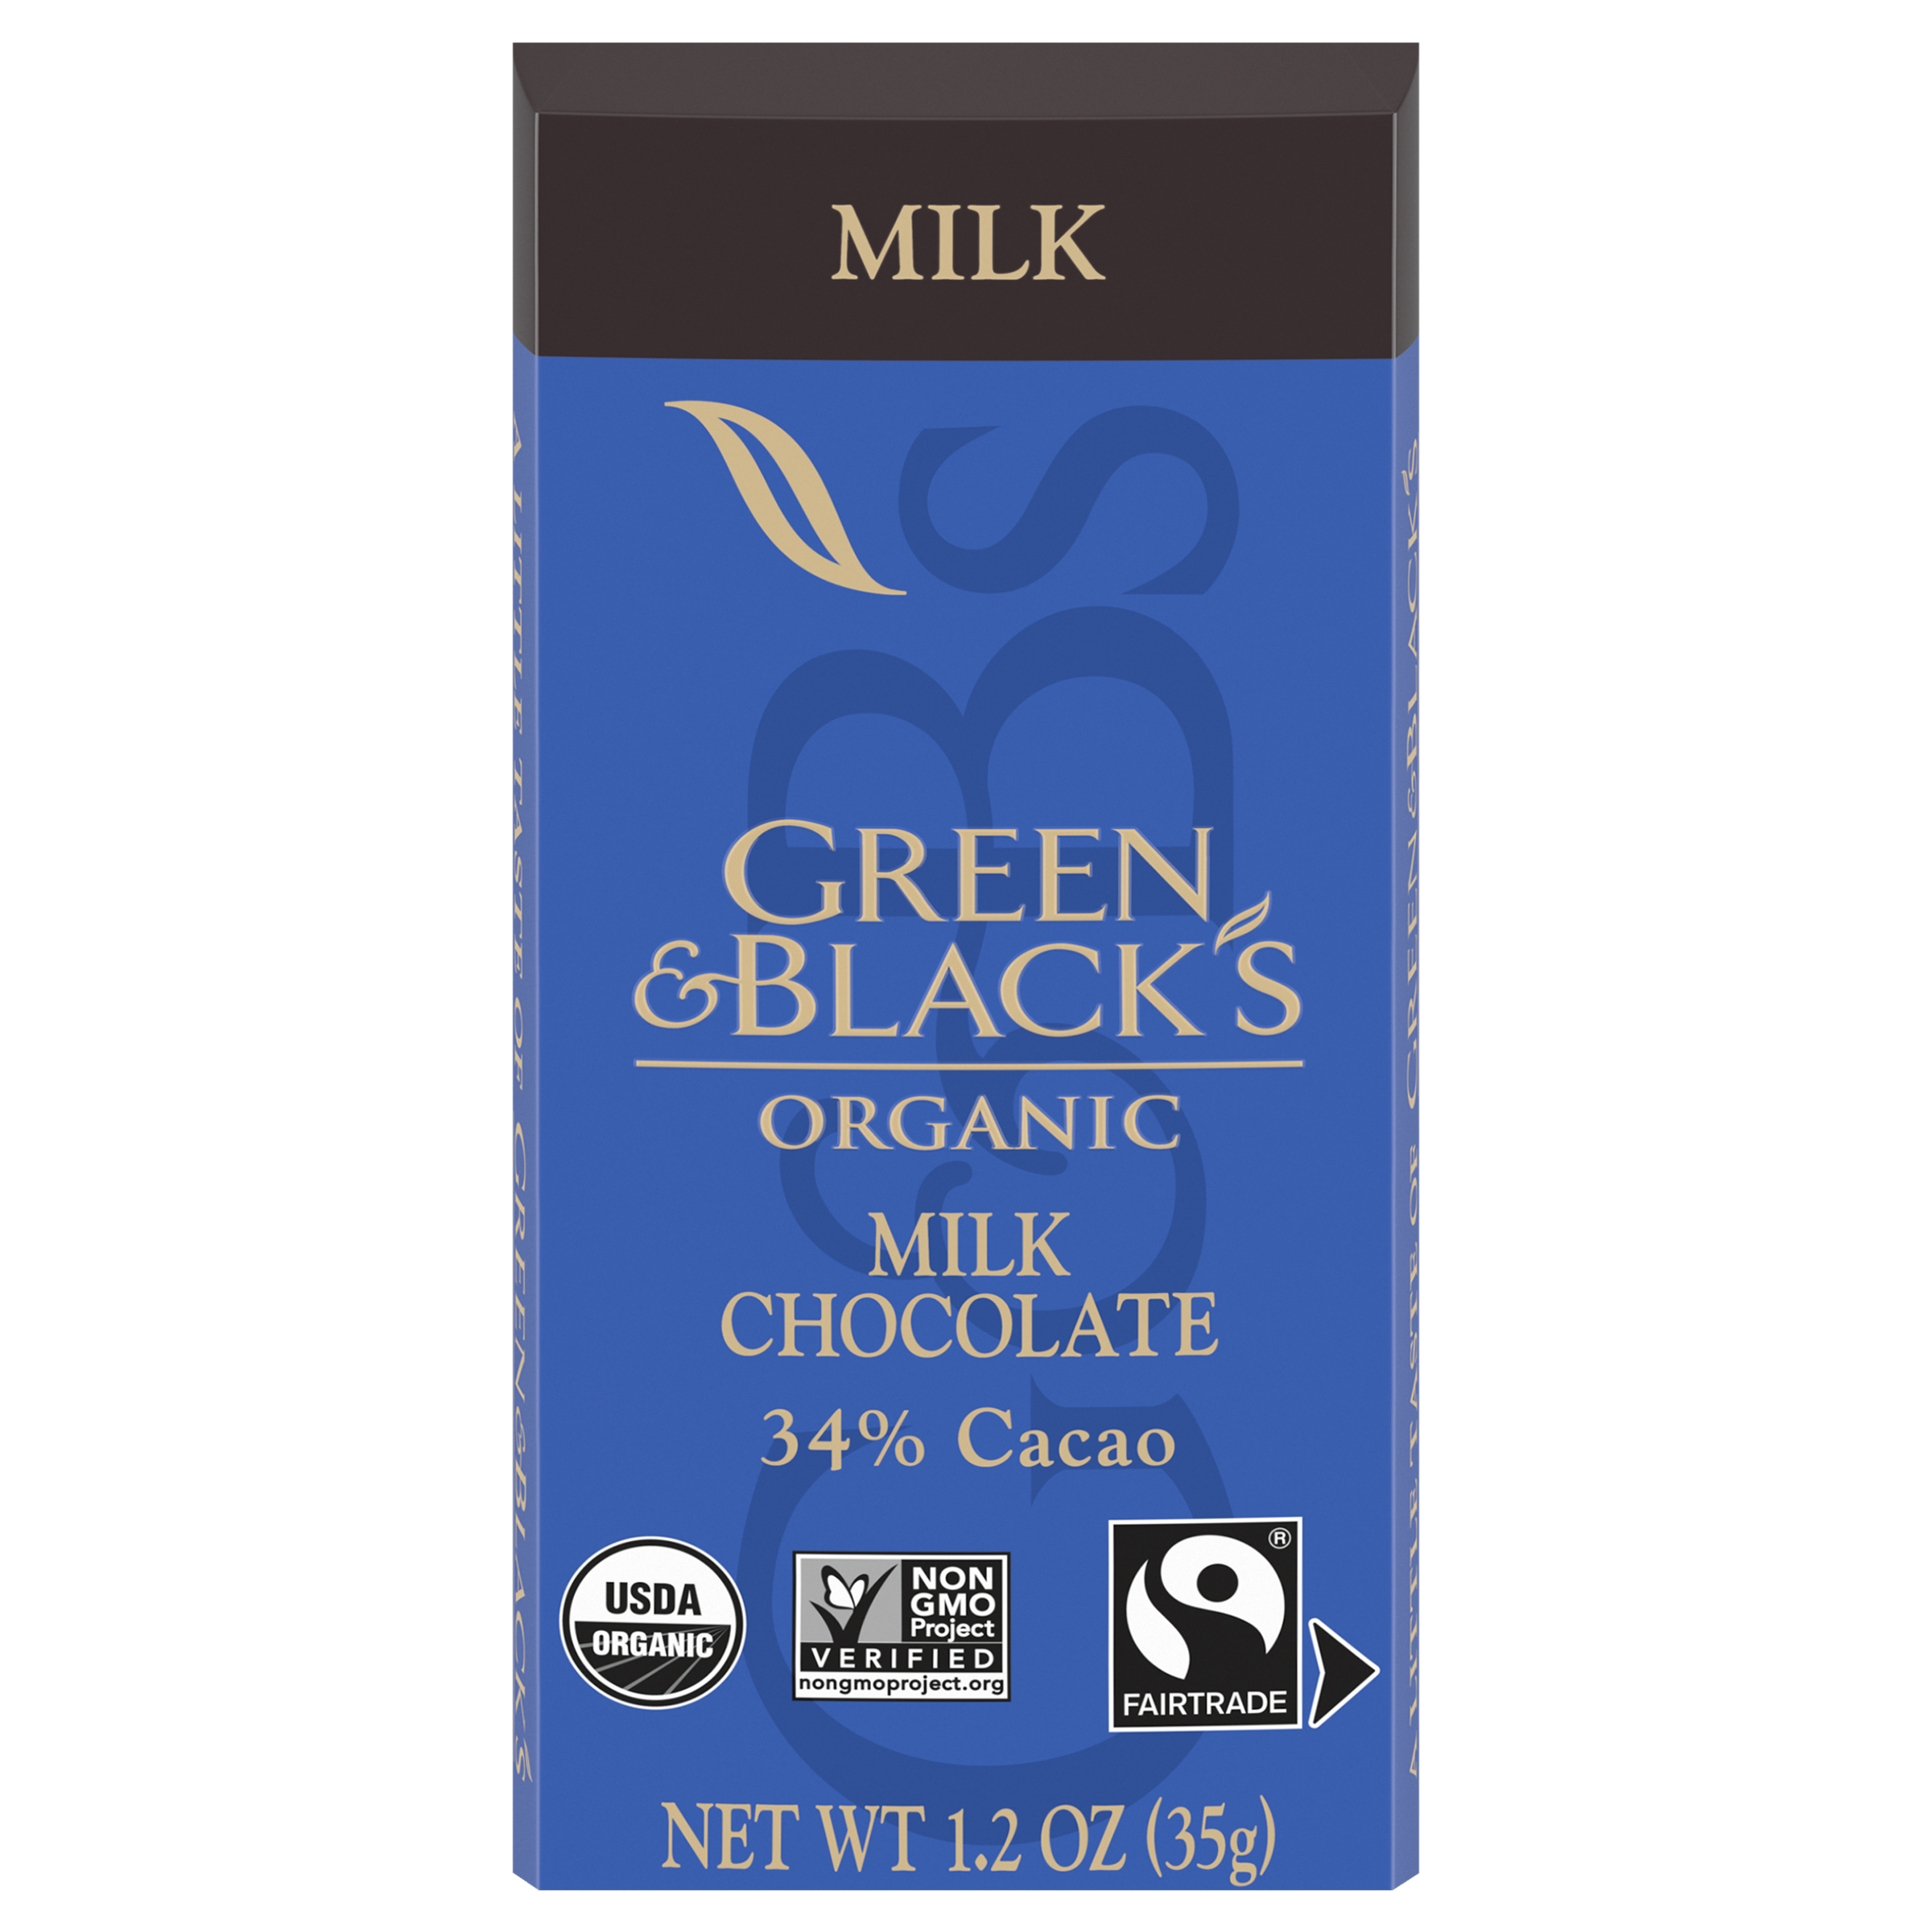 Green & Black's Organic Milk Chocolate Bar, 34% Cacao, 1.2 oz